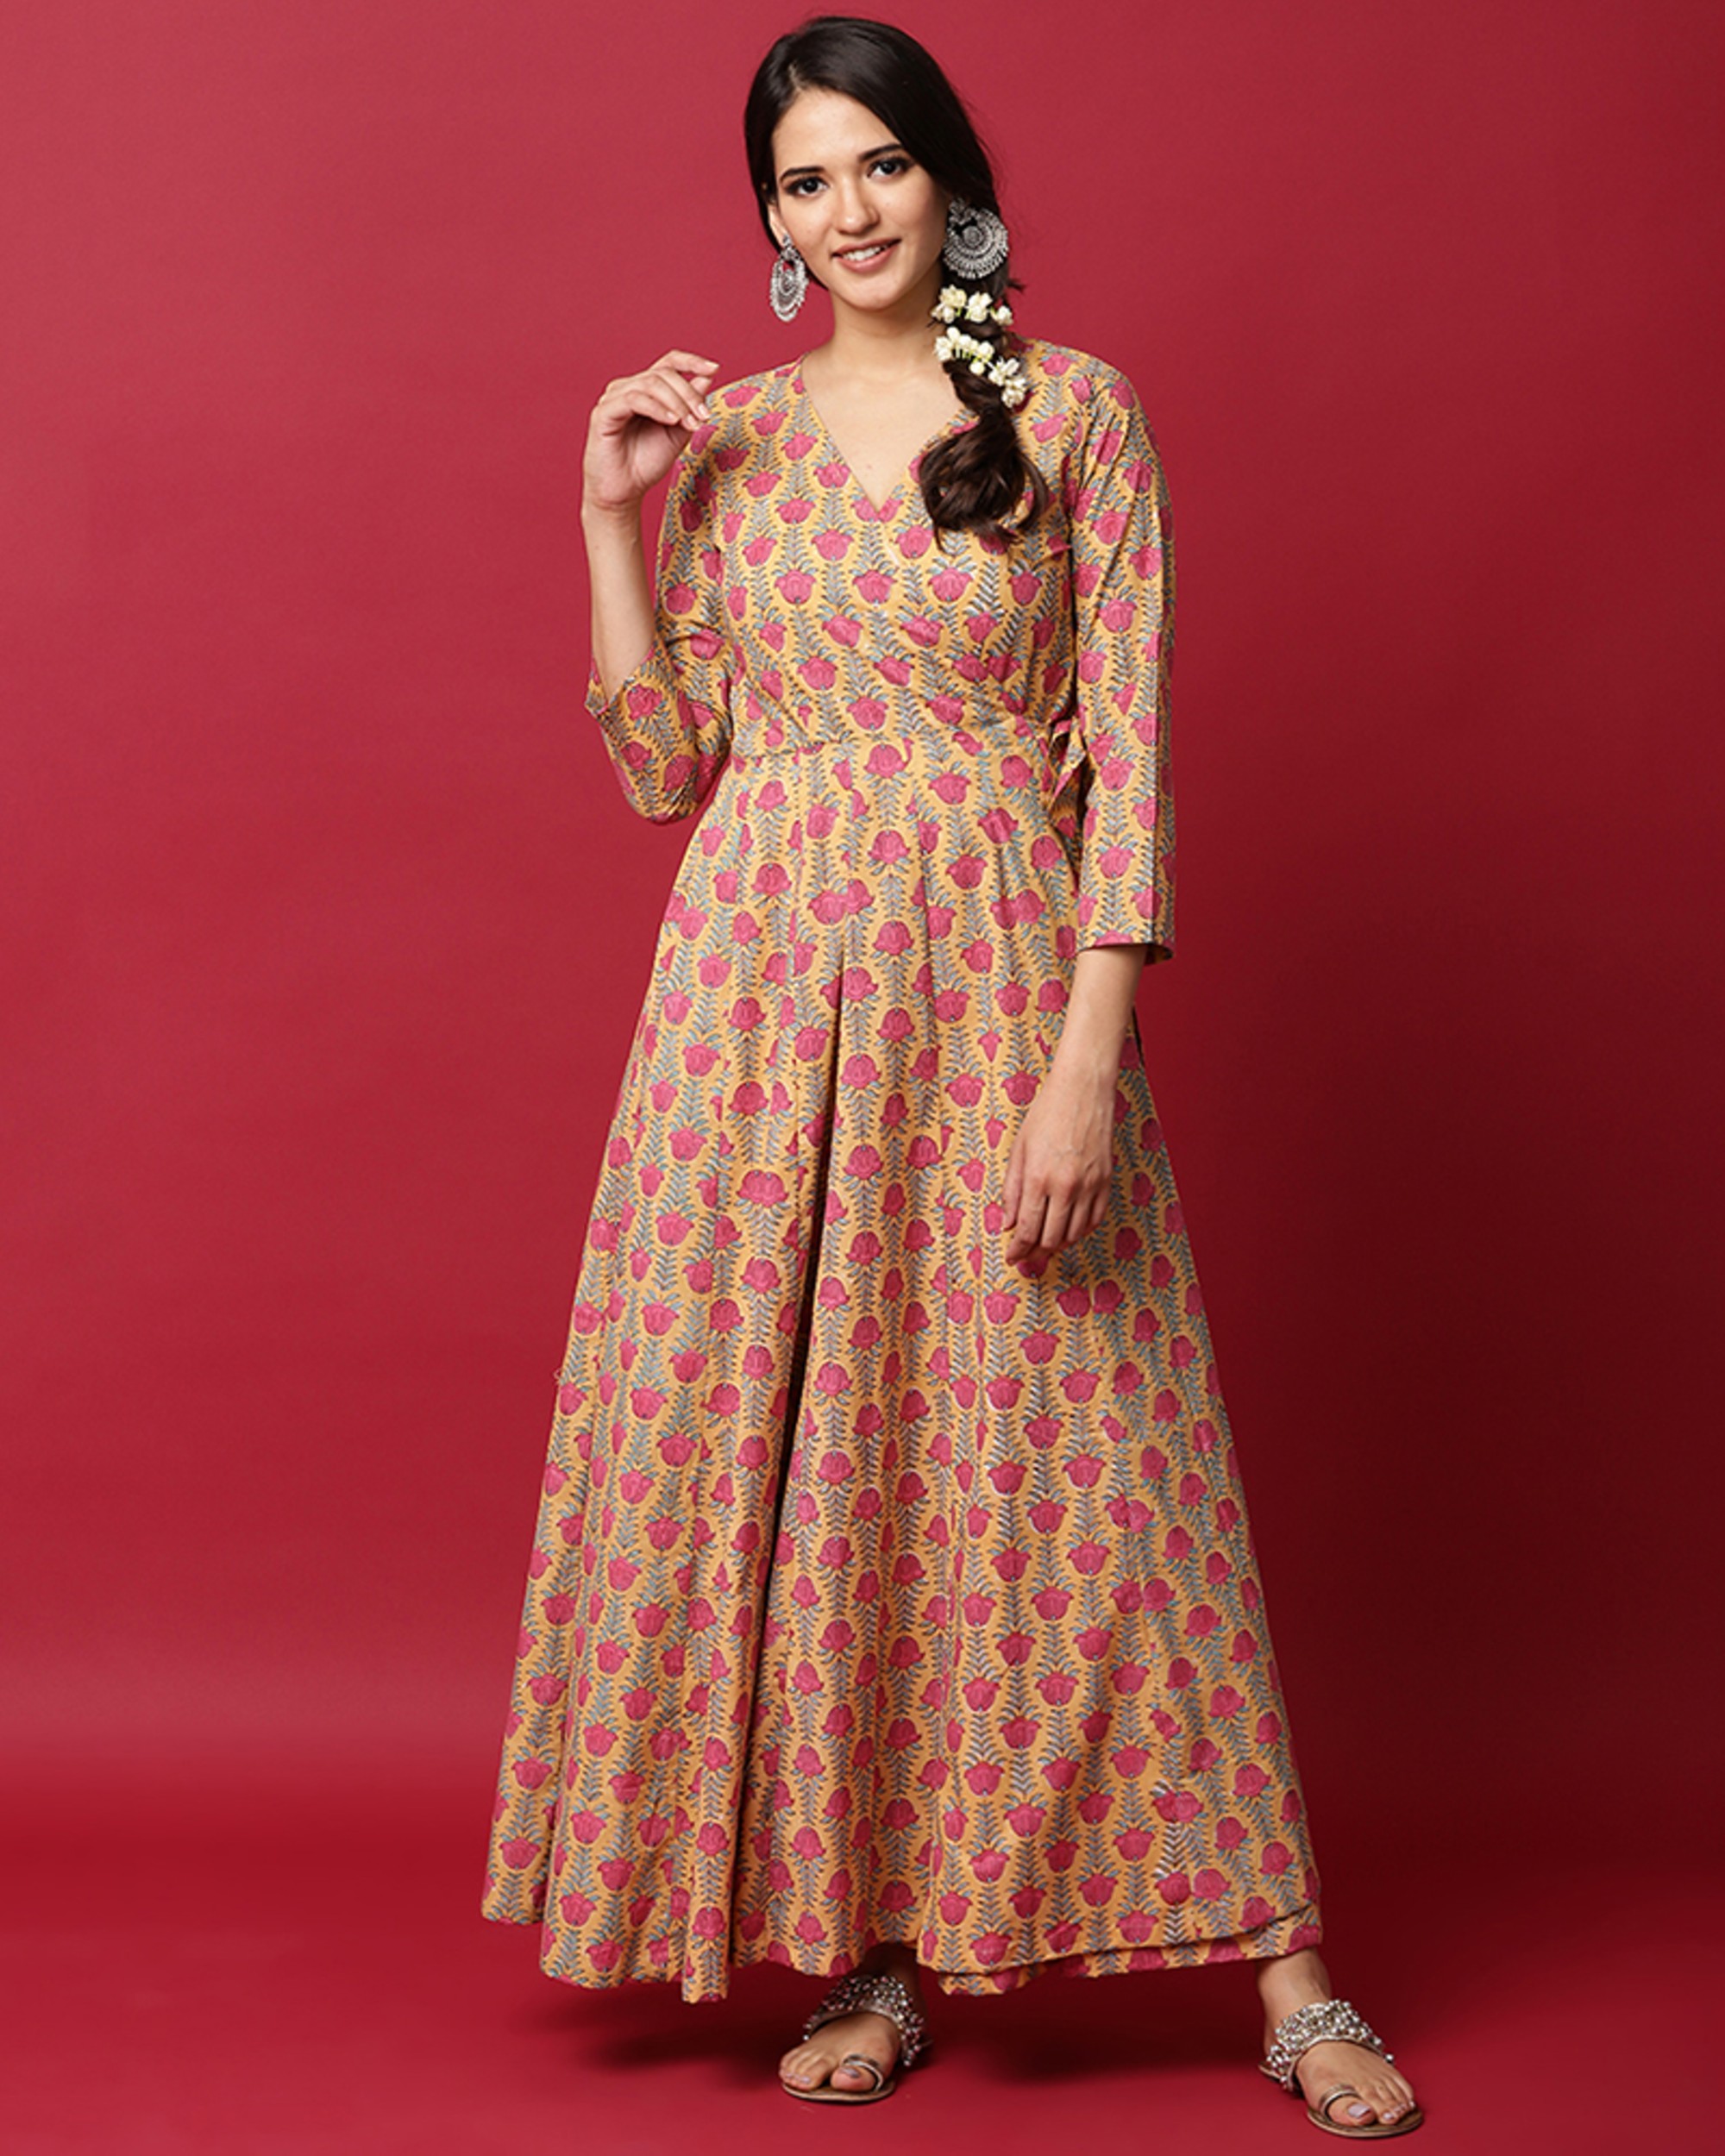 Mustard yellow and pink floral printed angrakha dress by Rivaaj | The ...